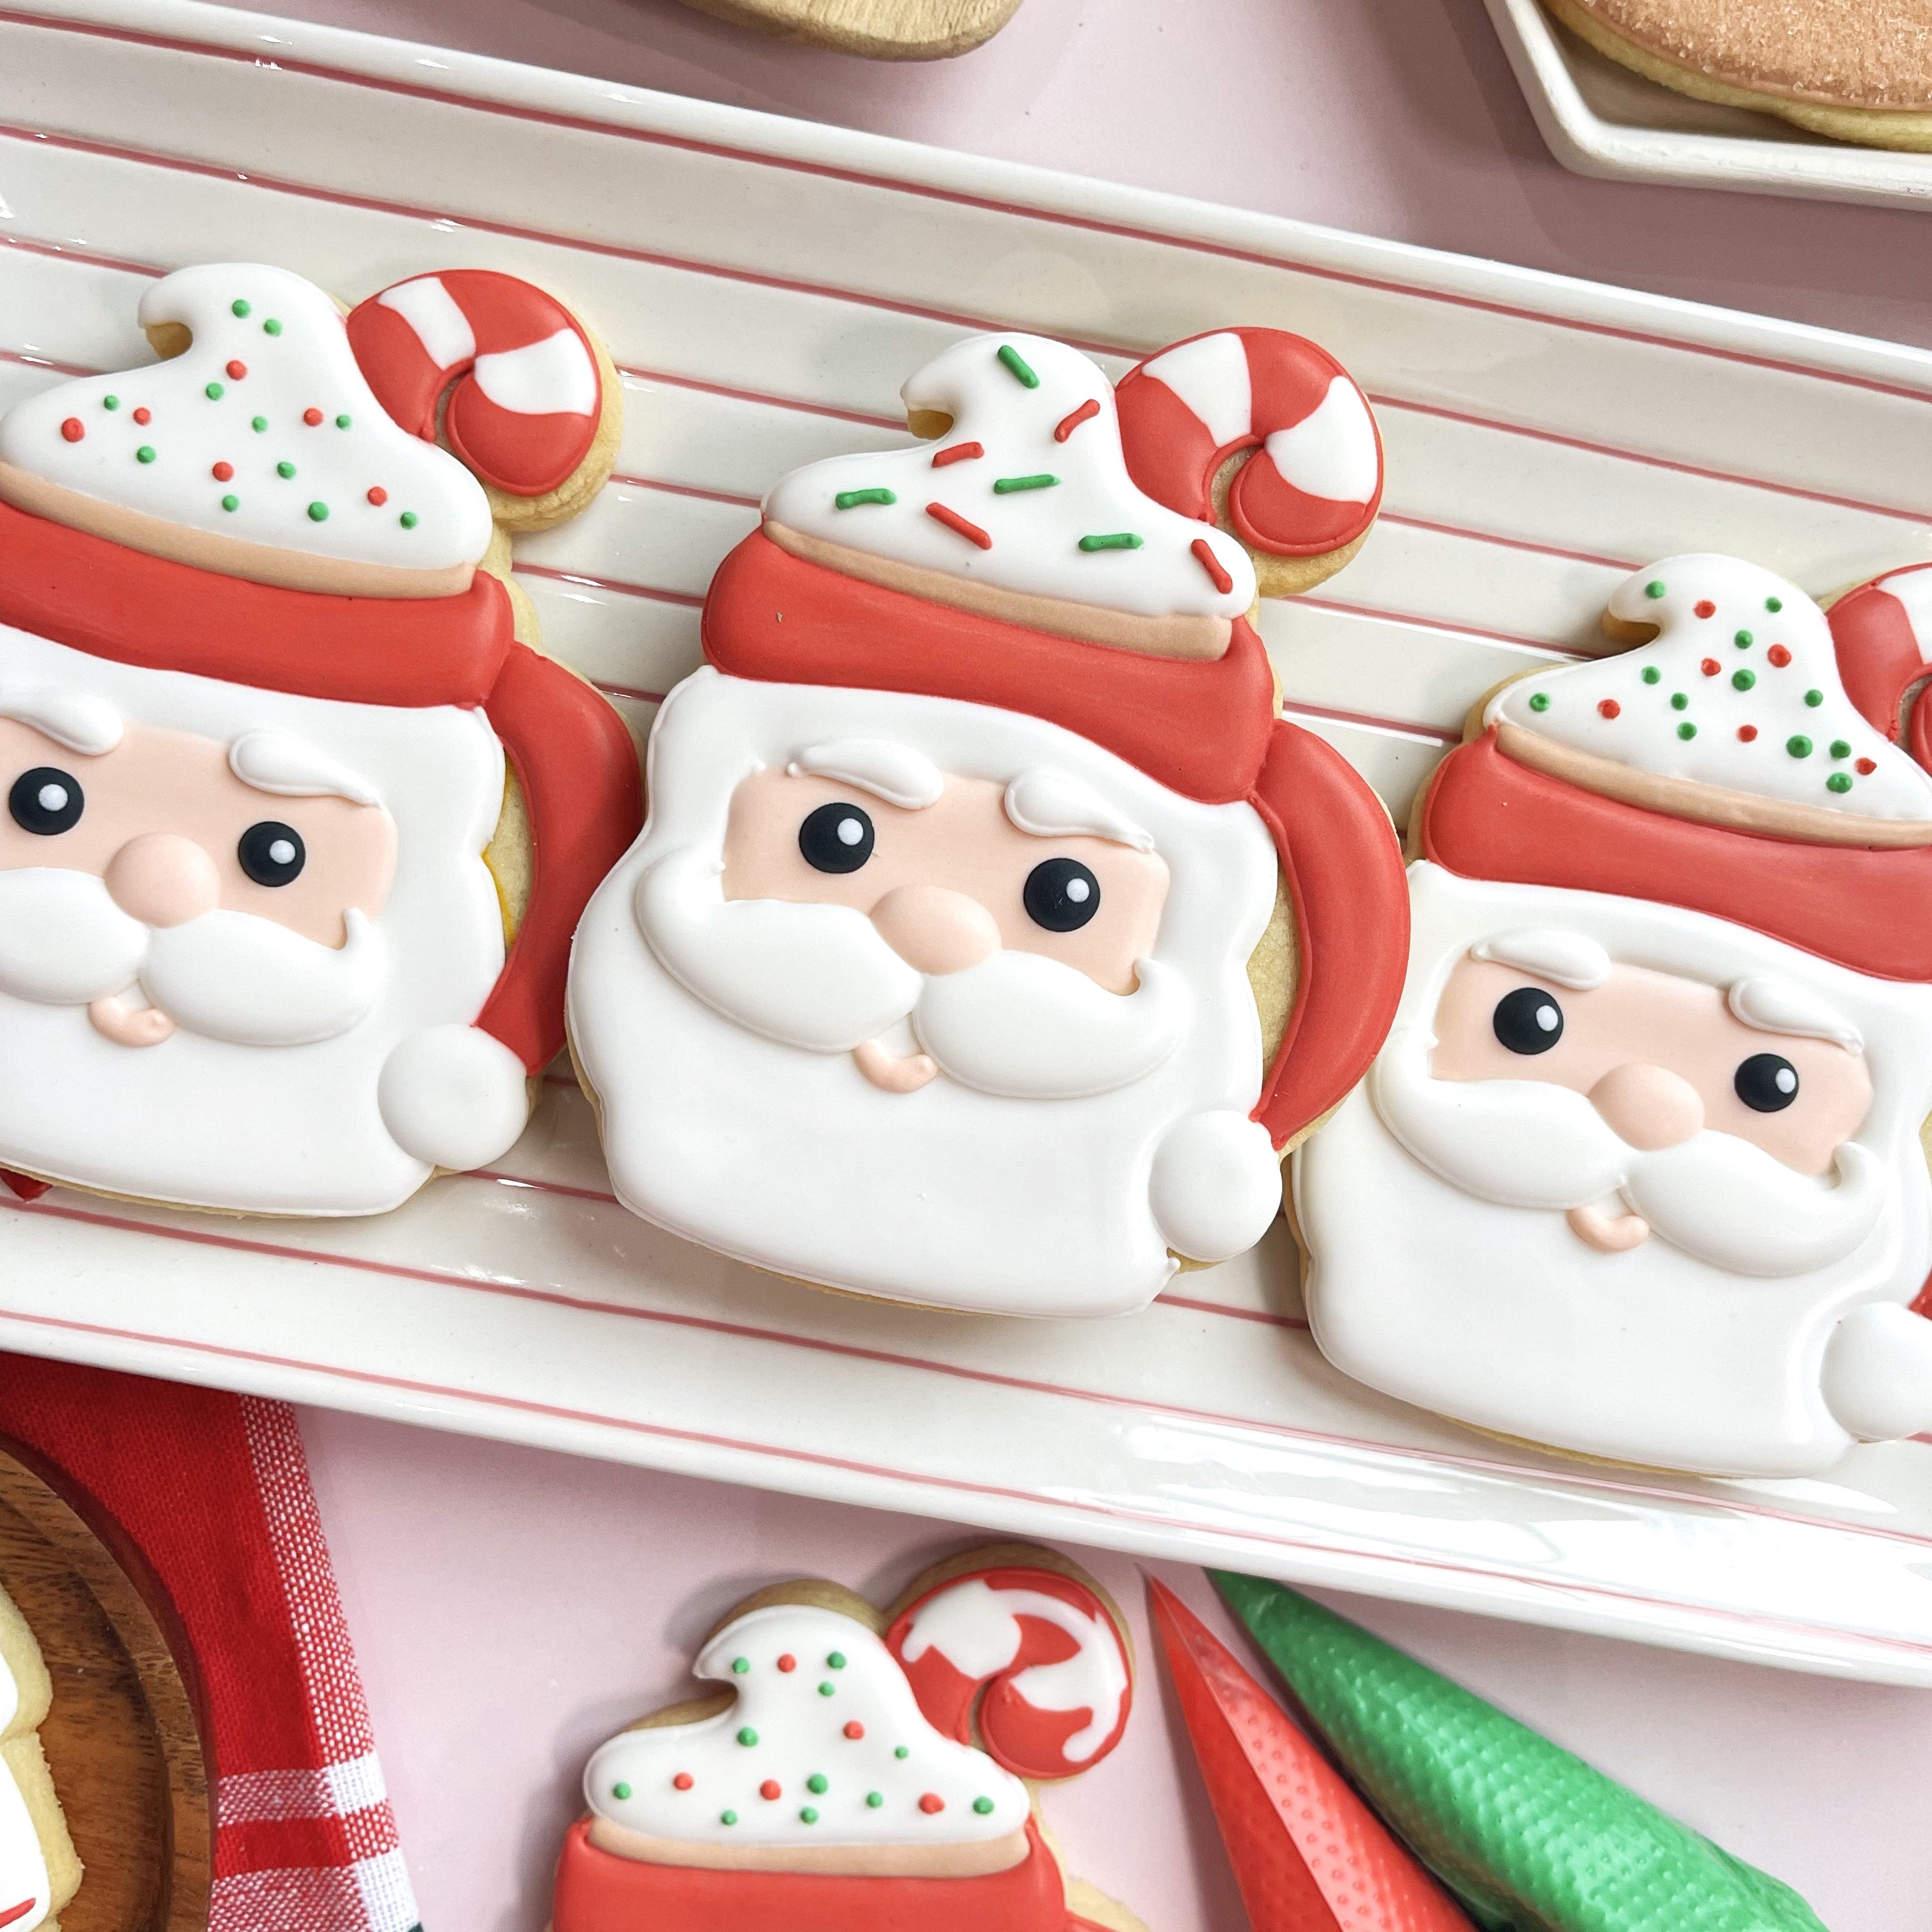 Elf Face New Cookie Cutter – The Flour Box